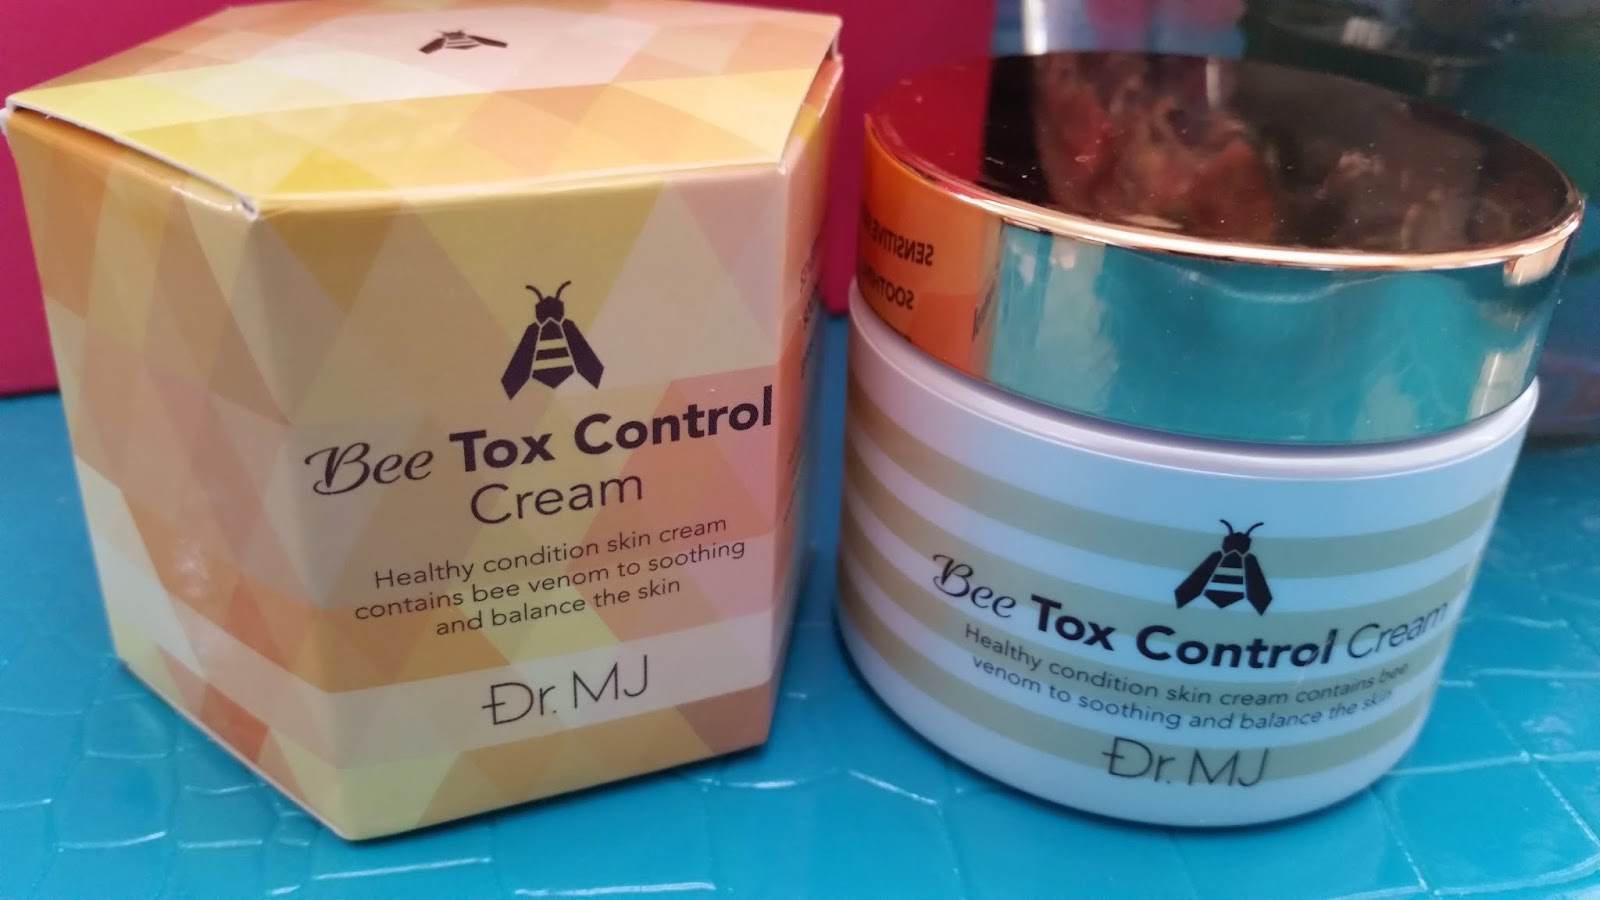 Dr. MJ Bee Tox Control Cream